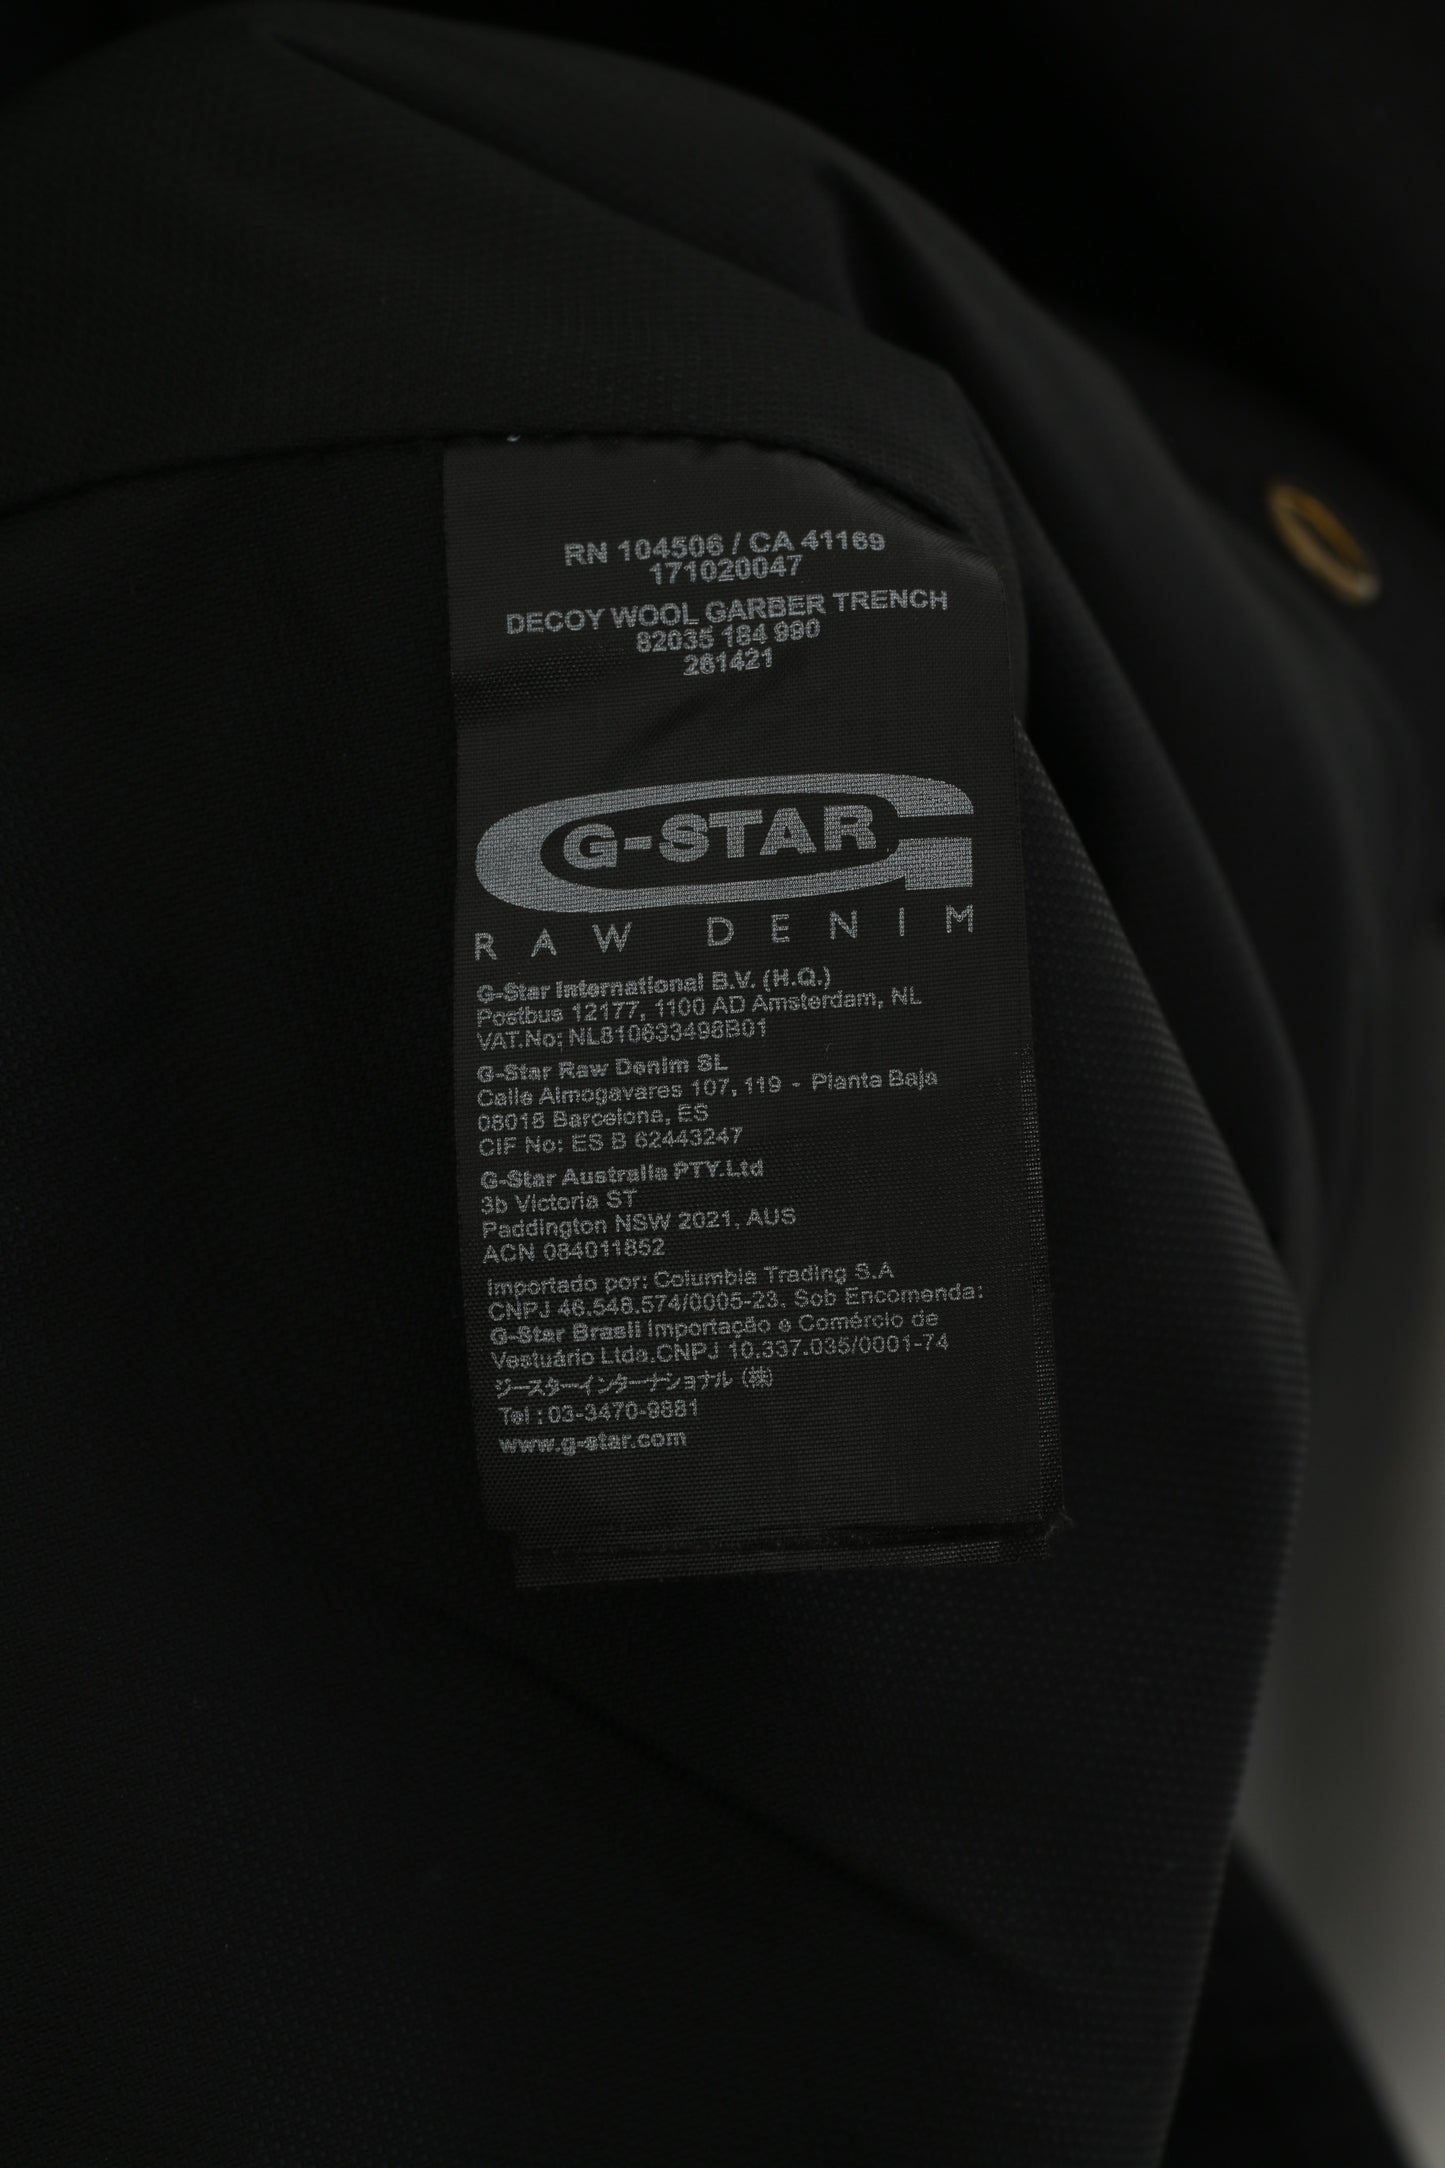 G-Star Raw Men XL (L) Coat Black Wool Nylon Casual Buttoned Decoy Garber Trench Top